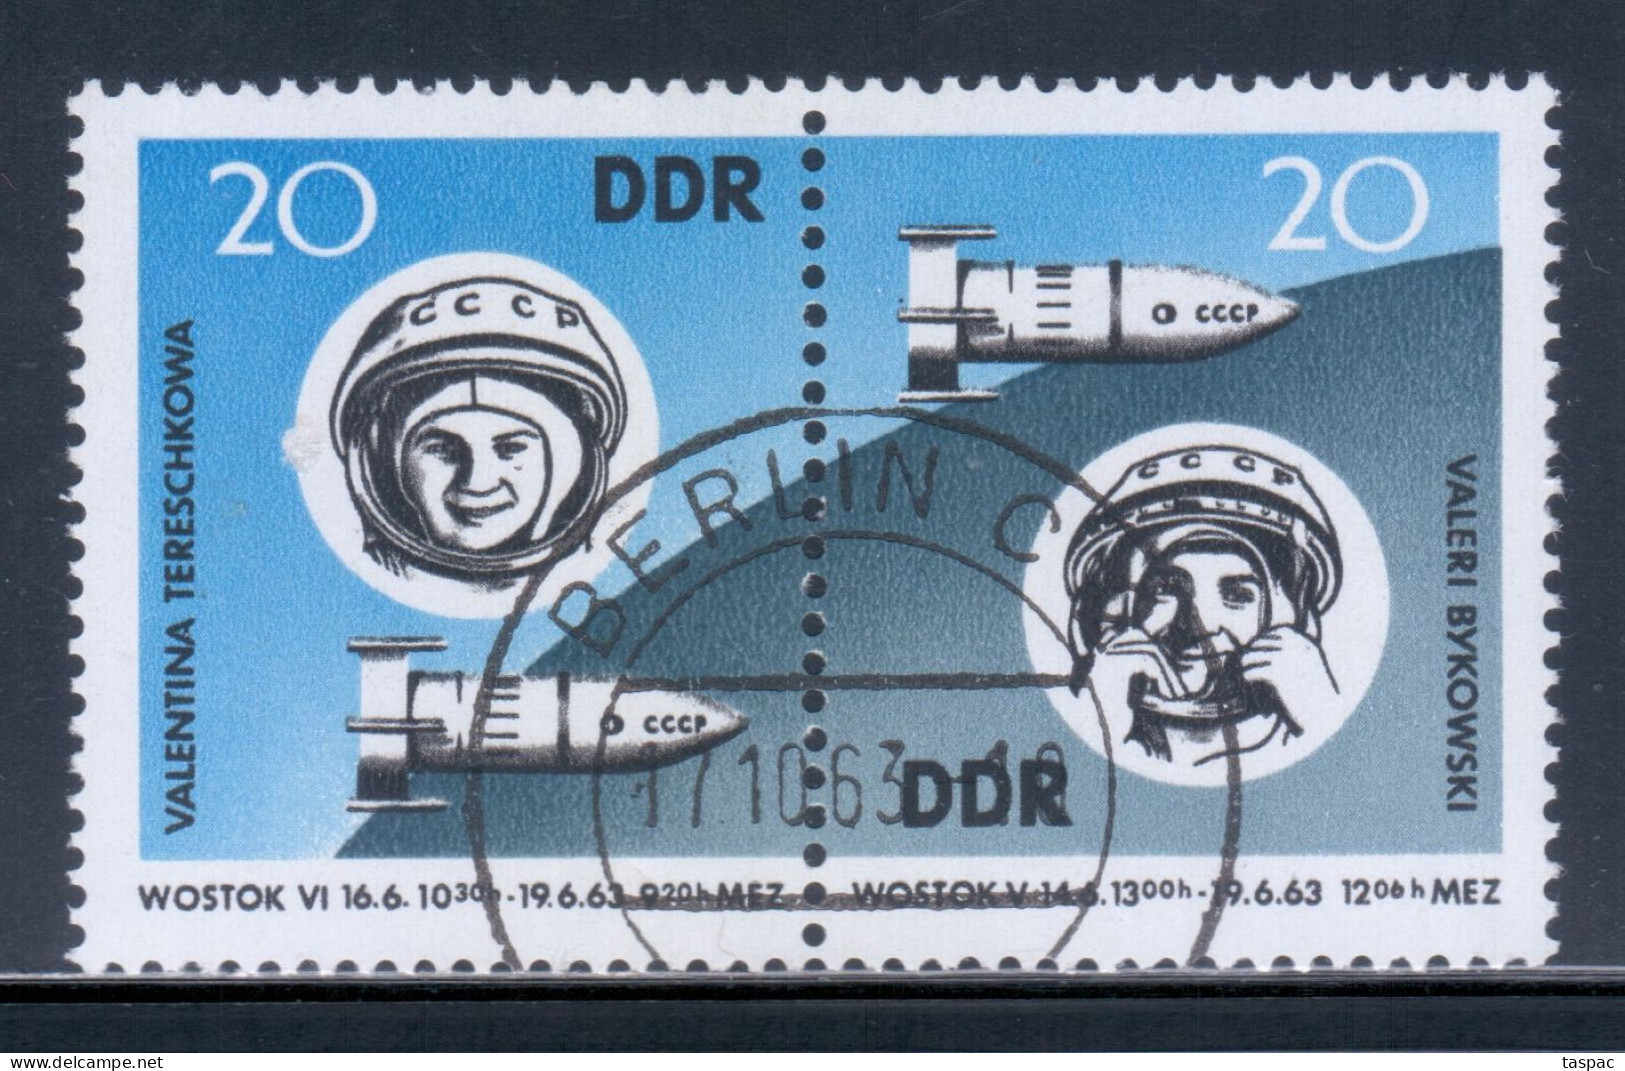 East Germany / DDR 1963 Mi# 970-971 Used - Pair - Space Flights Of Valeri Bykovski And Valentina Tereshkova - Europe